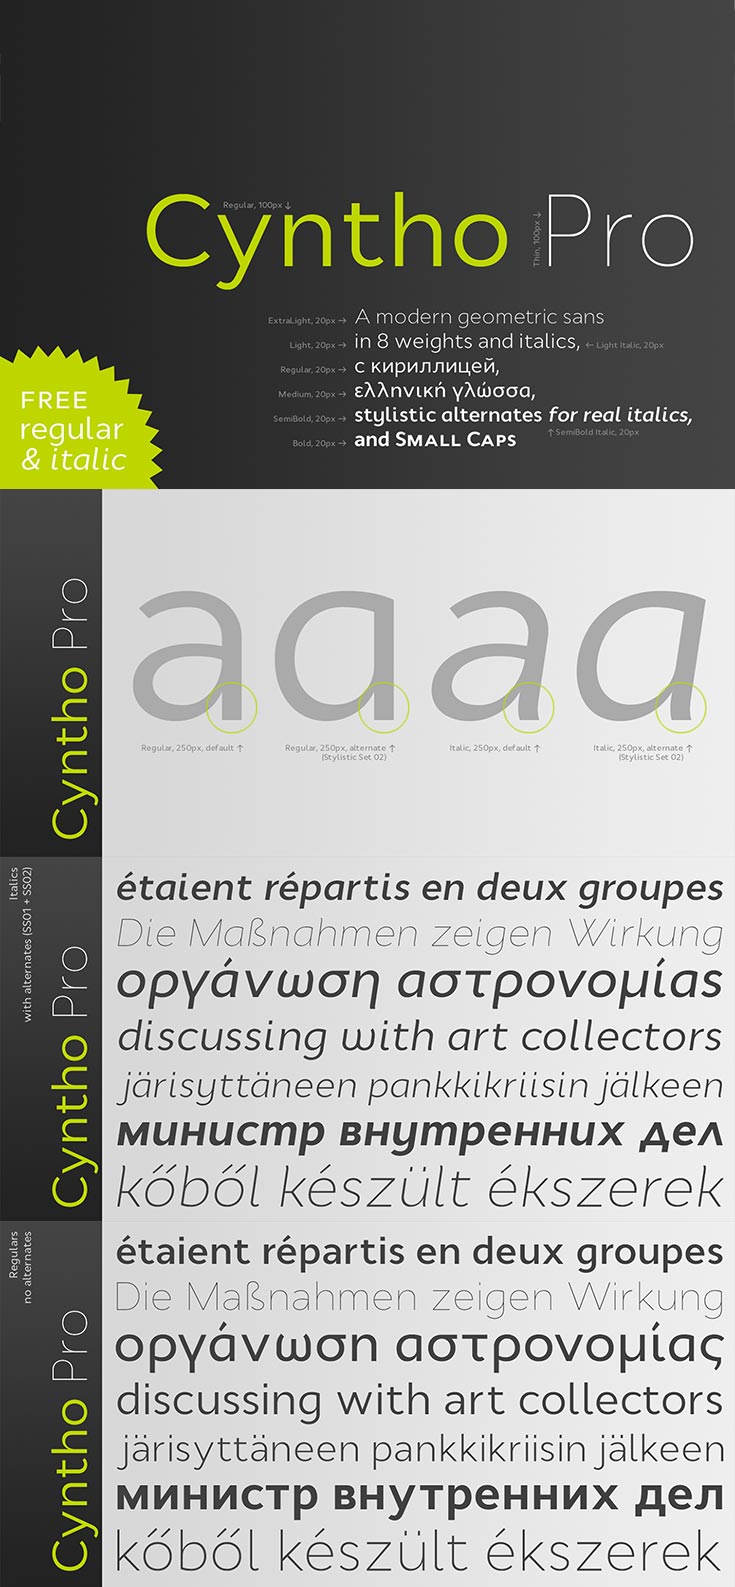 Free Cyntho Pro Sans Serif Typeface